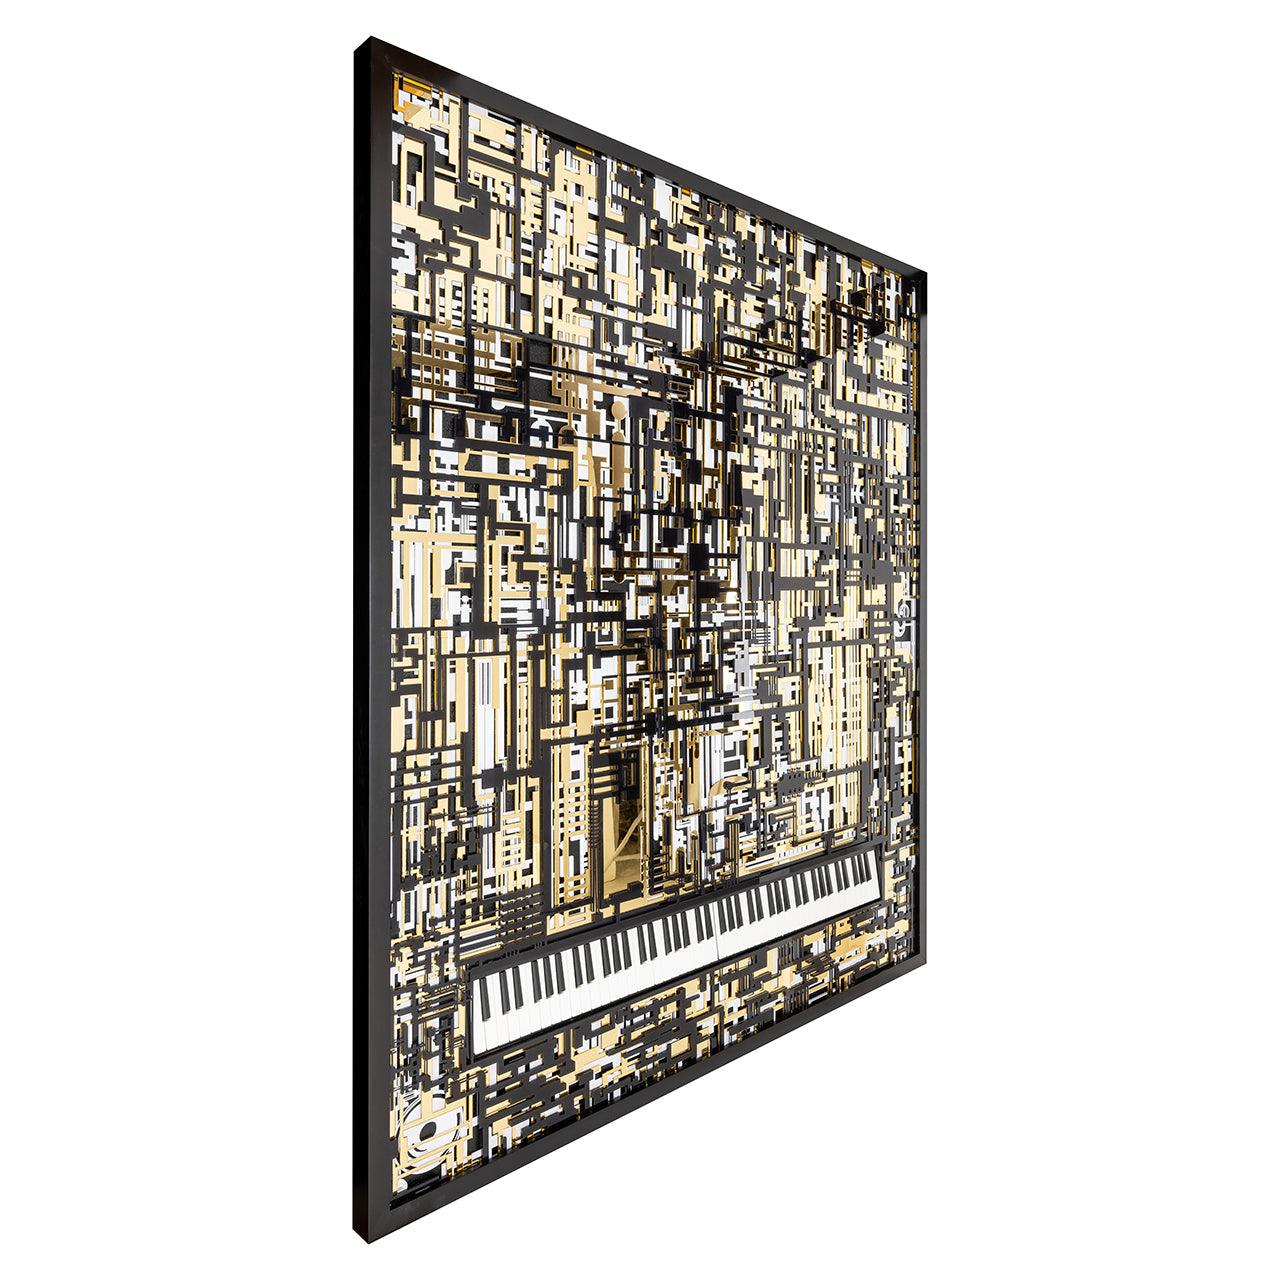 Richmond Interiors Richmond Interiors Wall art Piano mit echter Klaviermusik | 188x158 cm Codeso Living